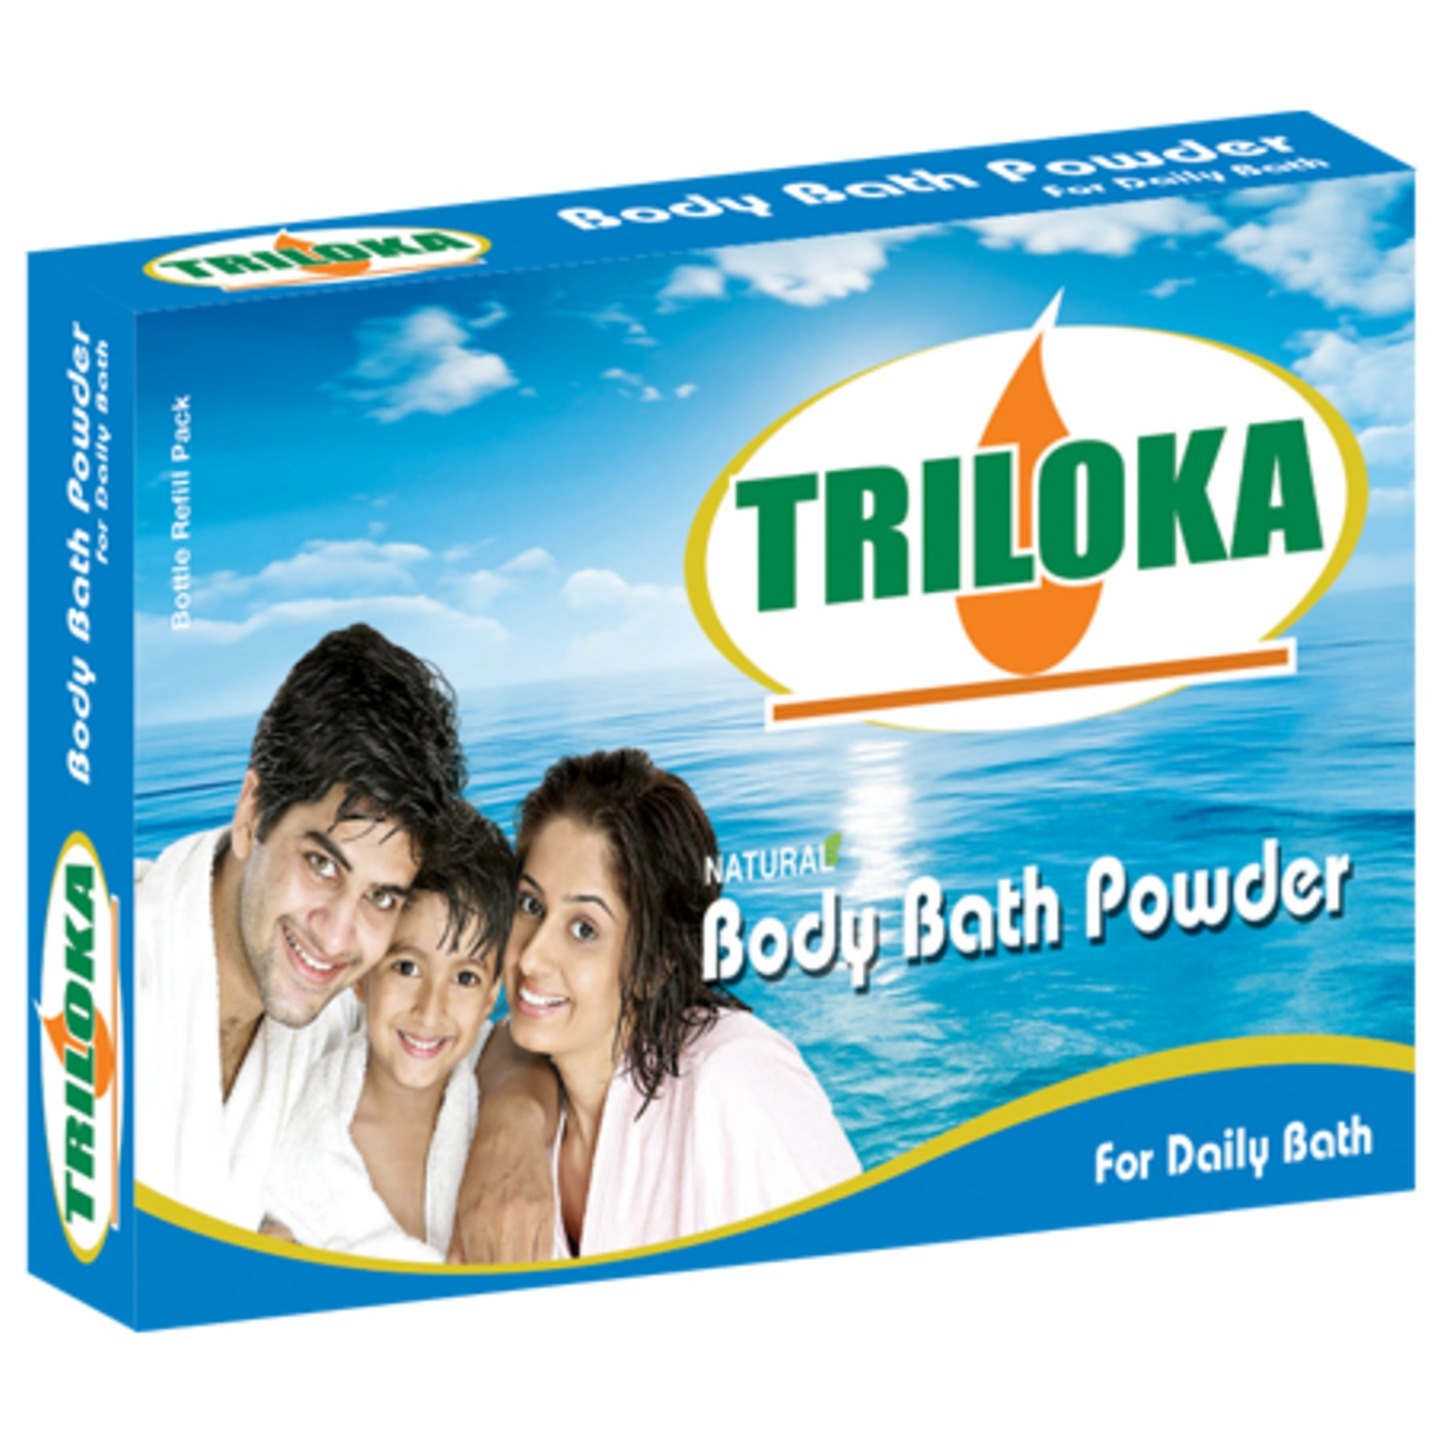 New Triloka Body Bathing Powder Body wash  Powder - 1 case